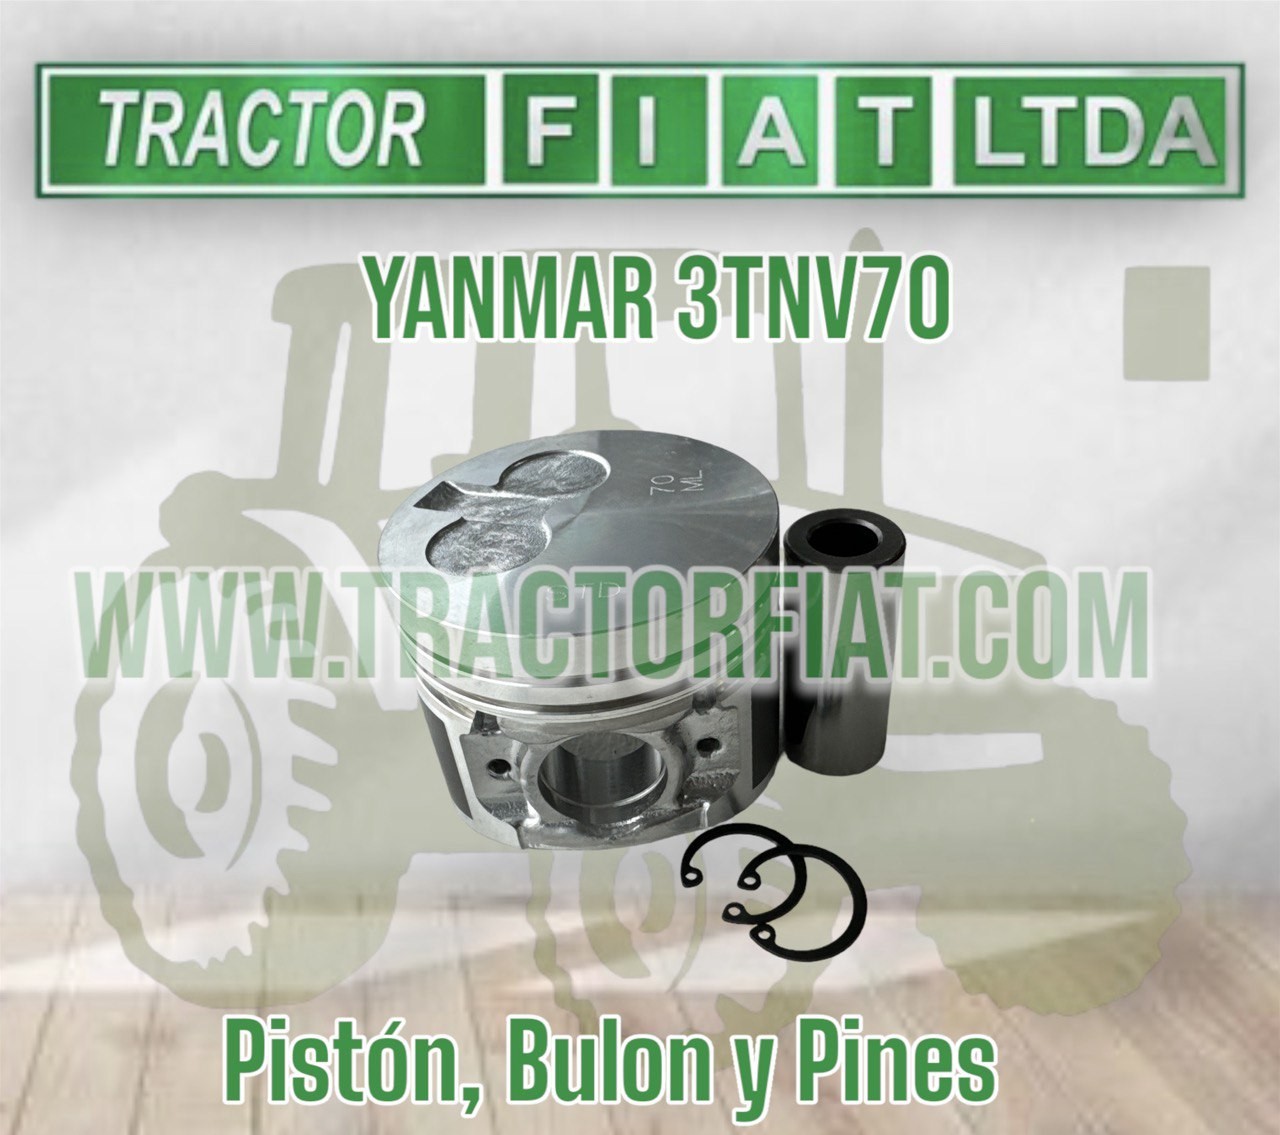 PISTON, BULON Y PINES - MOTOR YANMAR 3TNV70